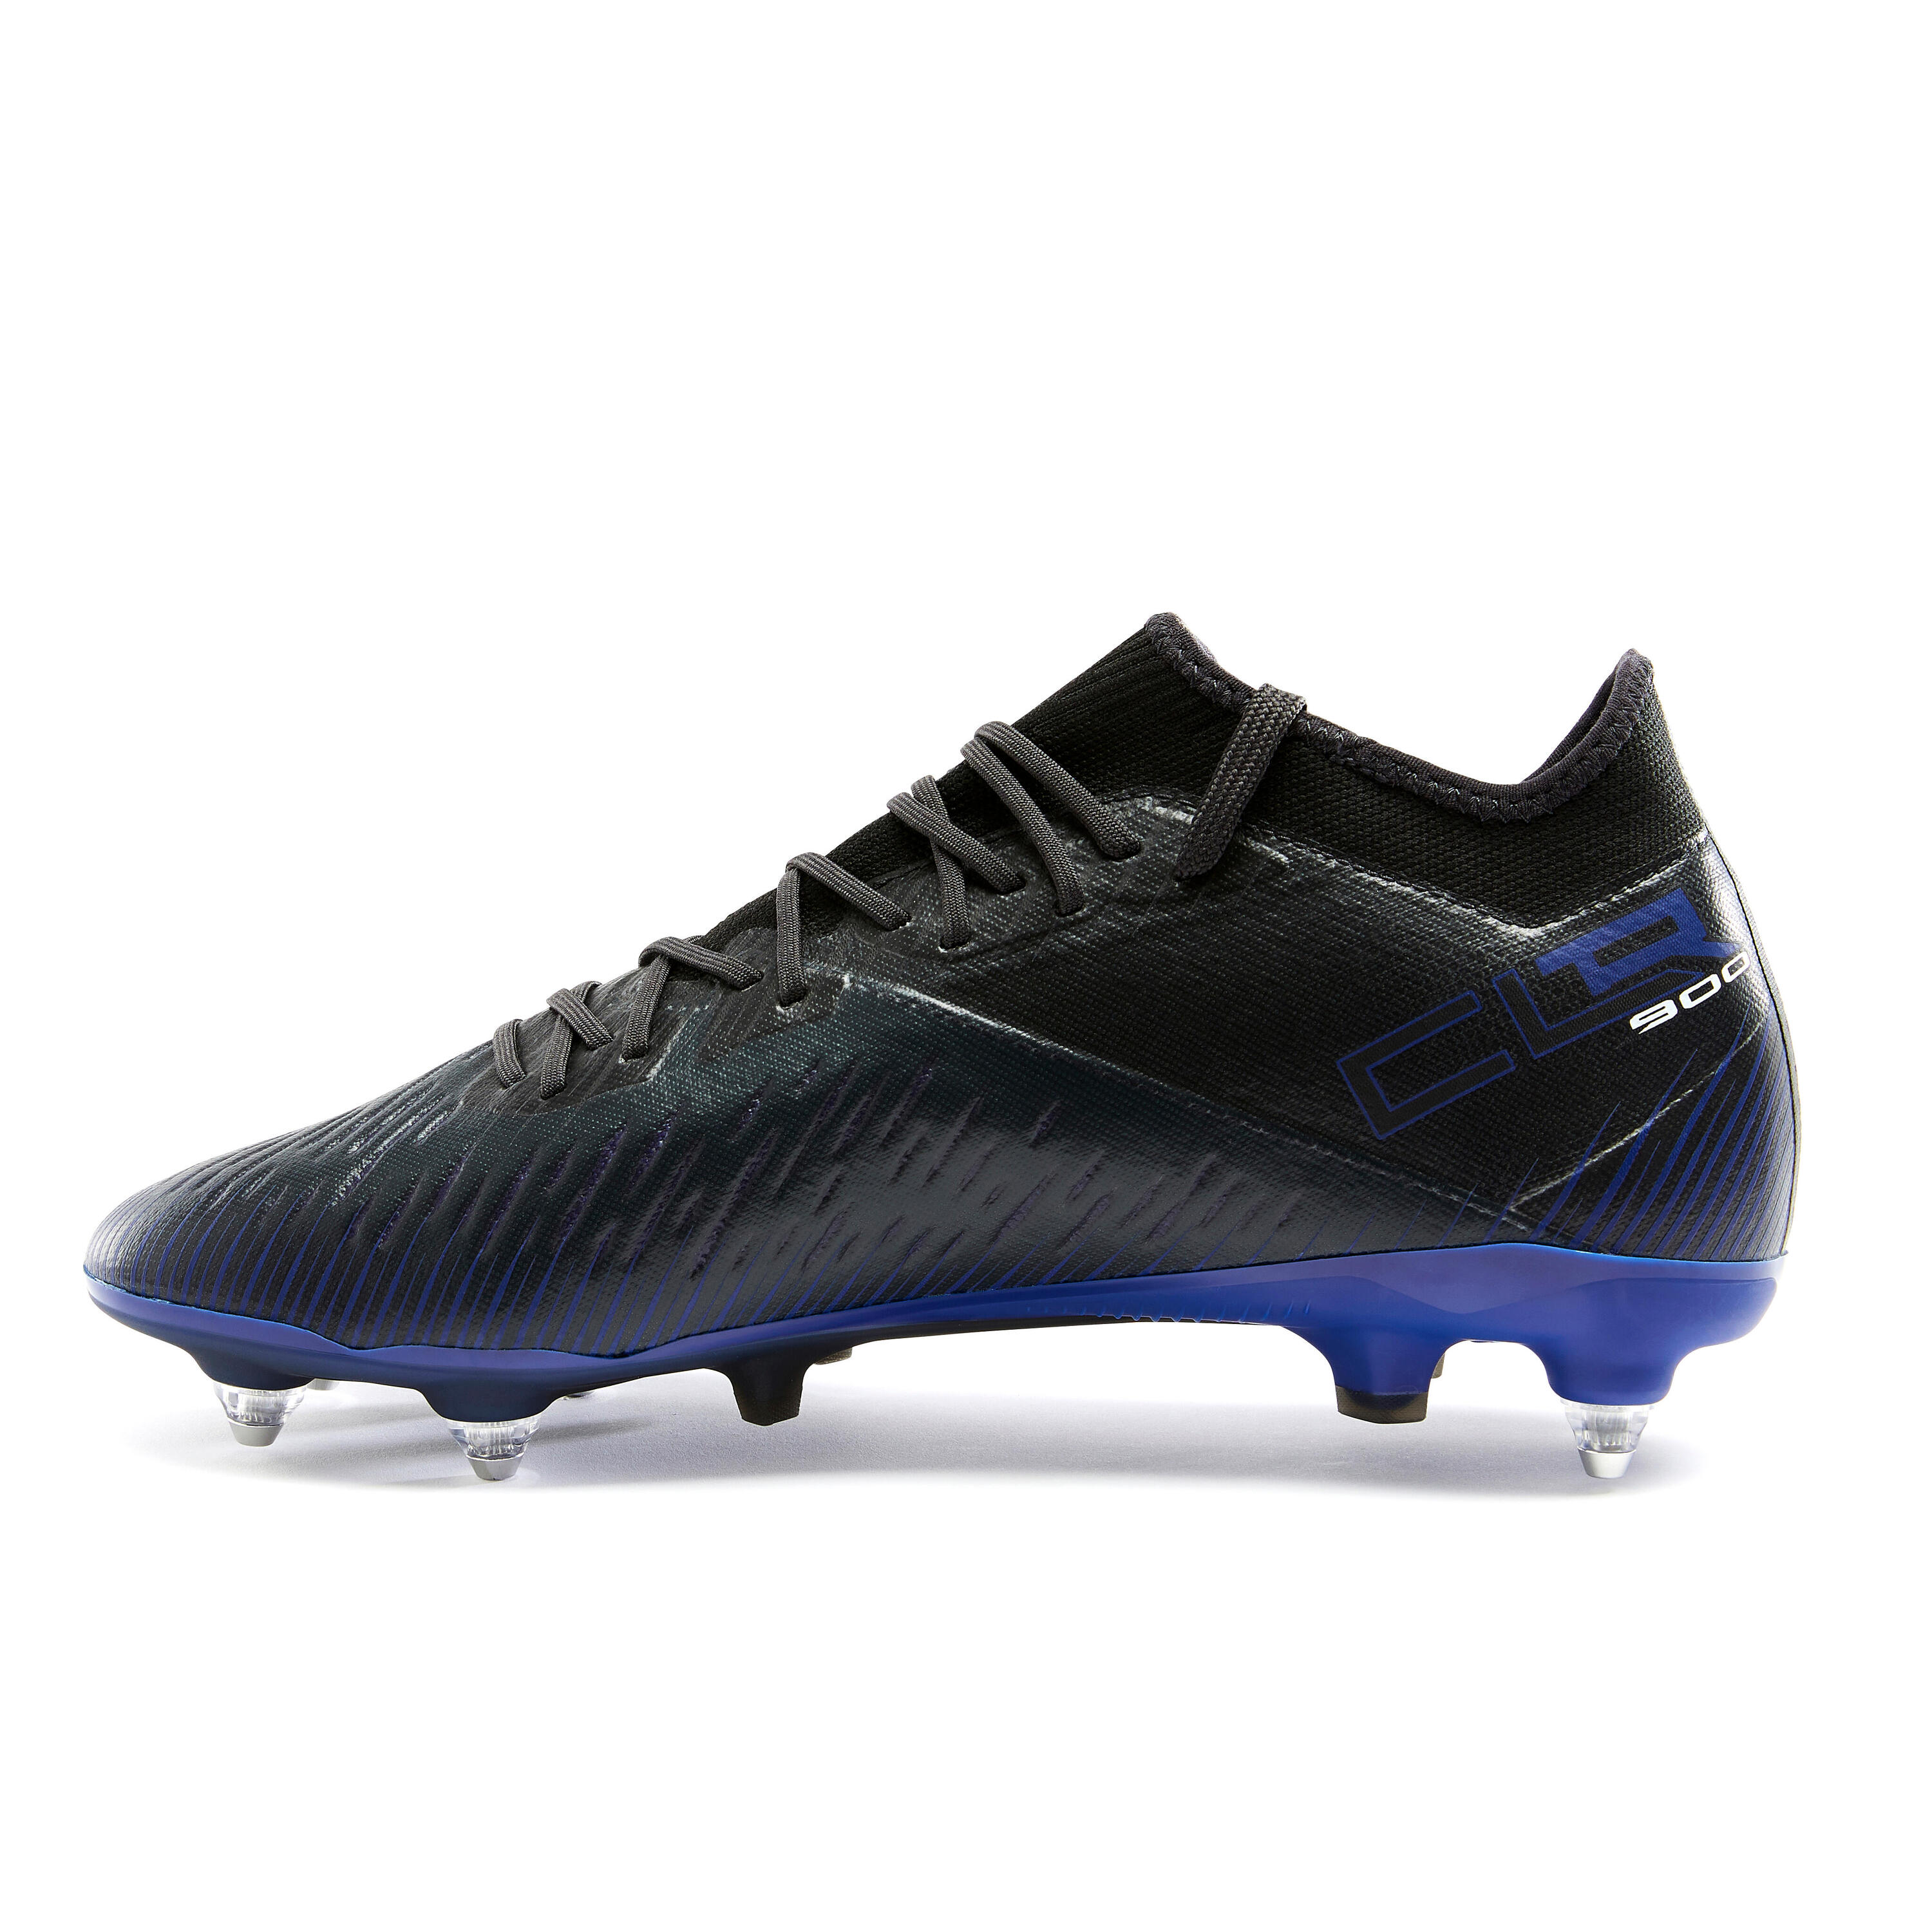 Adult Soft Ground Football Boots CLR SG - Black/Blue 8/8